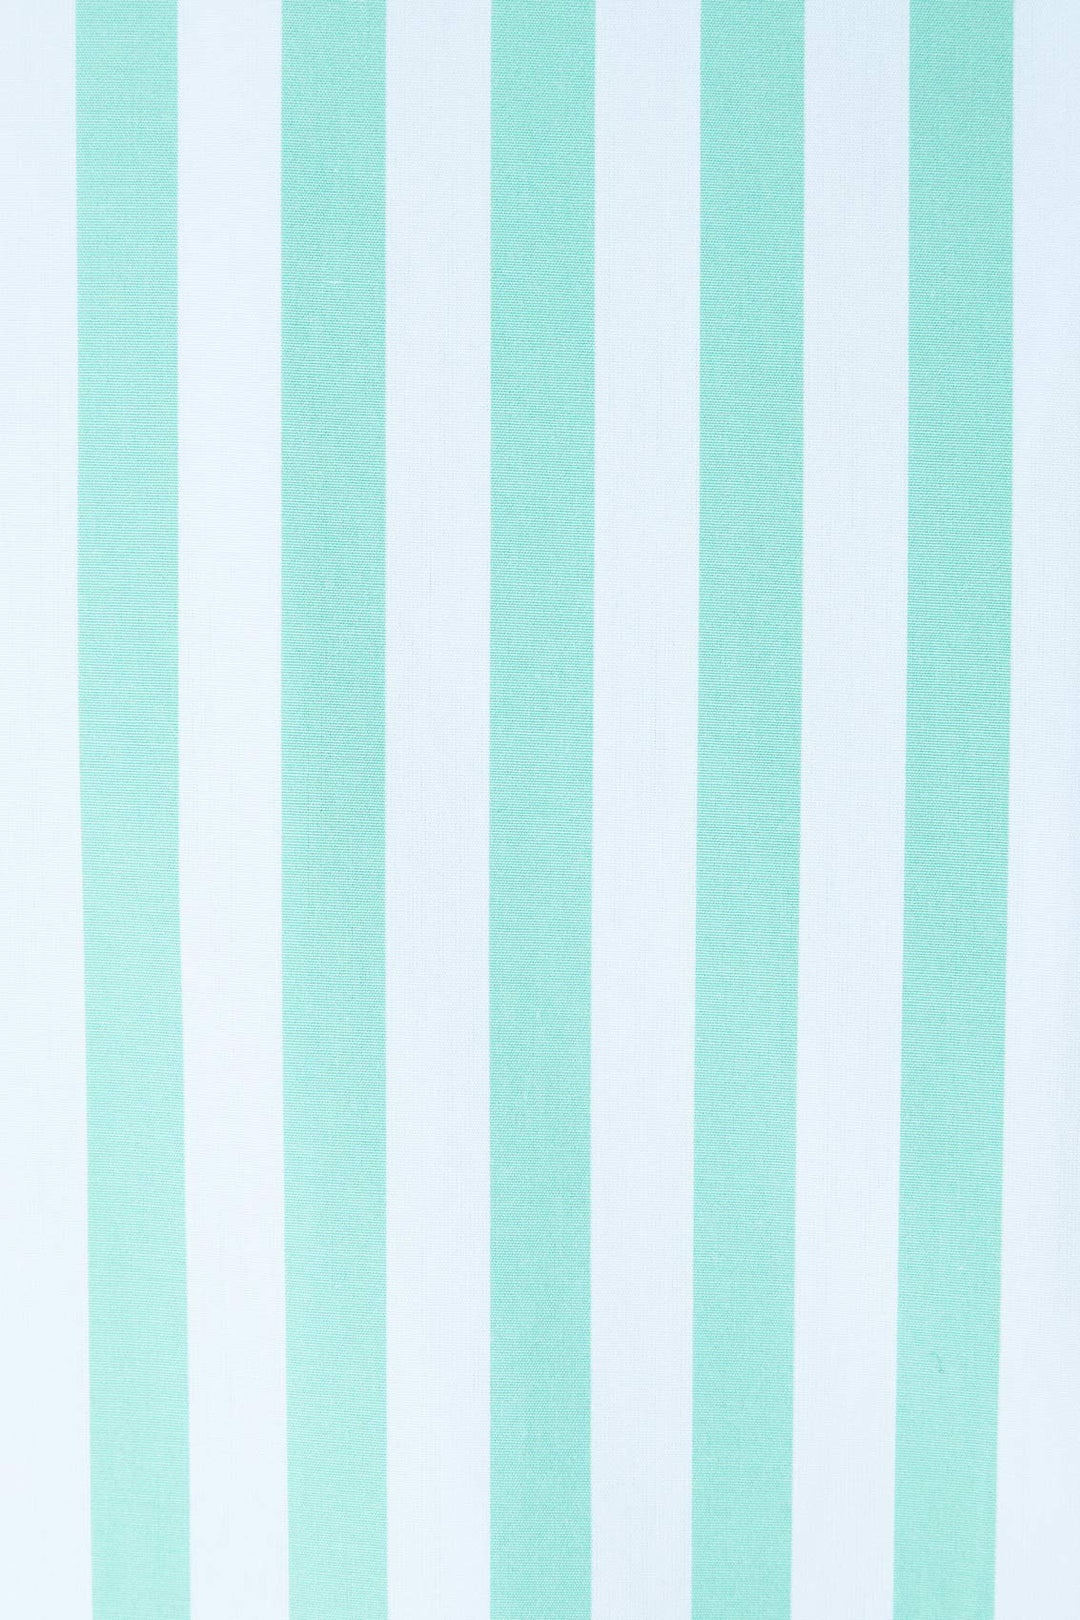 OVER SHIRT / green & azure stripes - 8